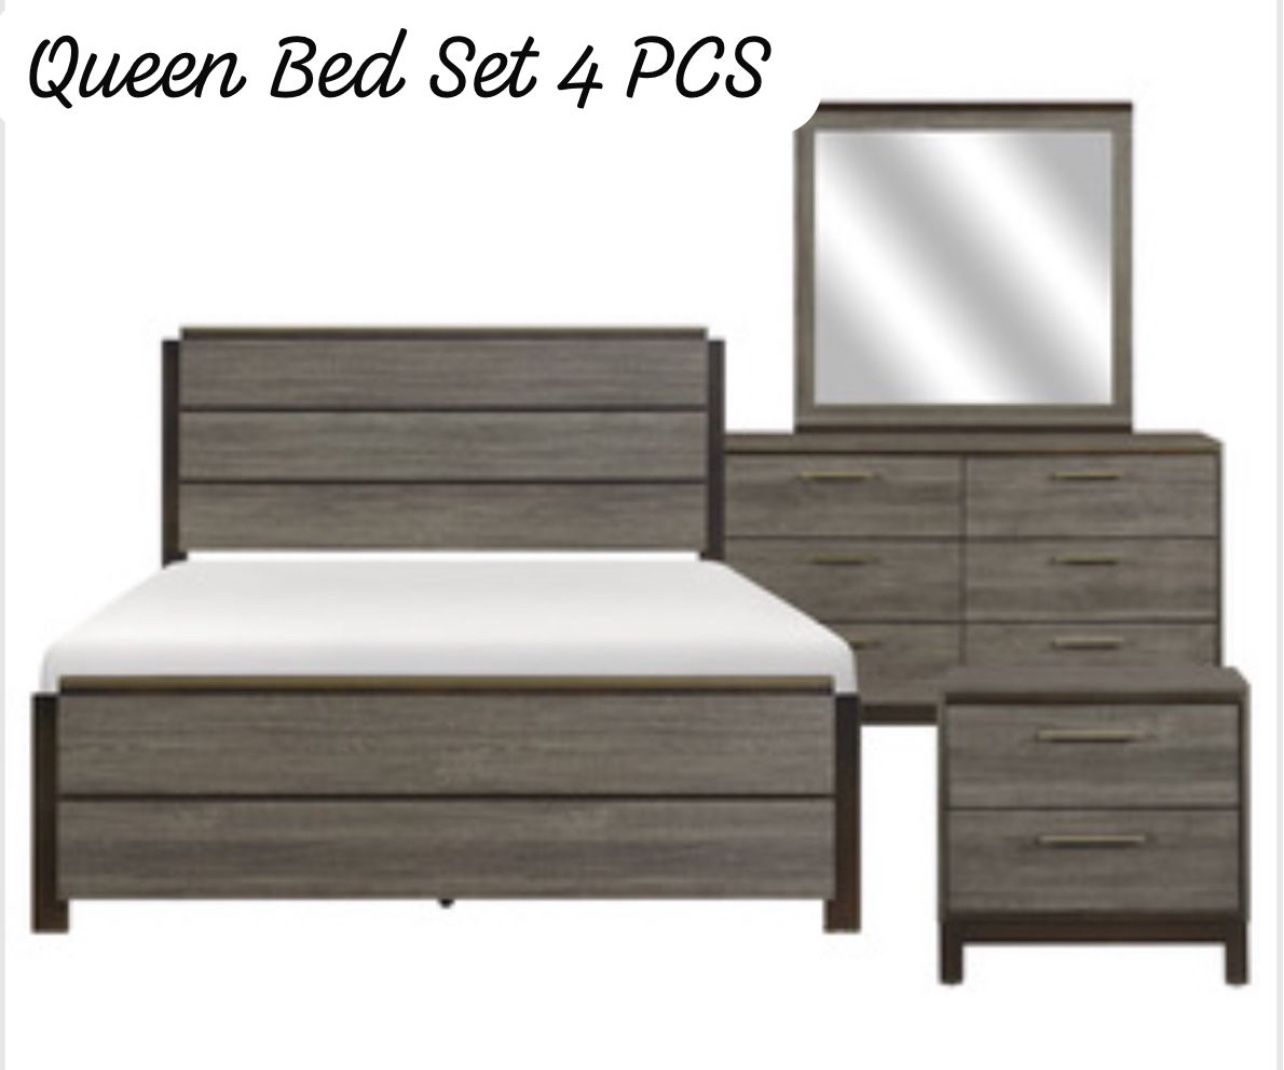 Queen Bed Set 4 PCS In Special Offer At 45701 Highway 27 N Davenport Fl 33897 